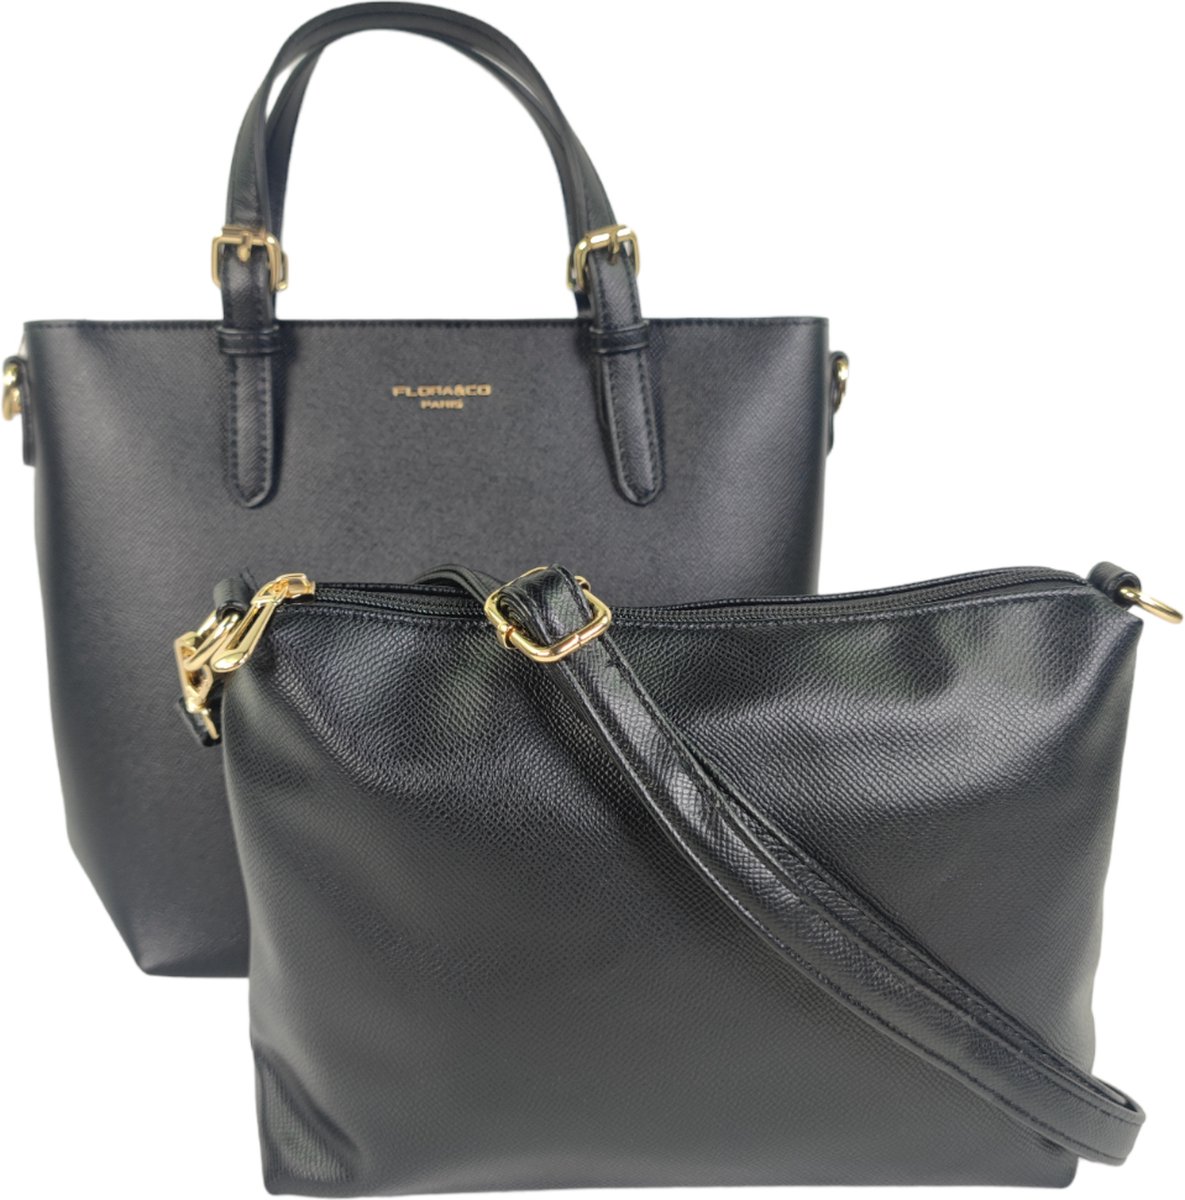 Flora&Co - Paris - Tas in tas/bag in bag - handtas/crossbody zwart